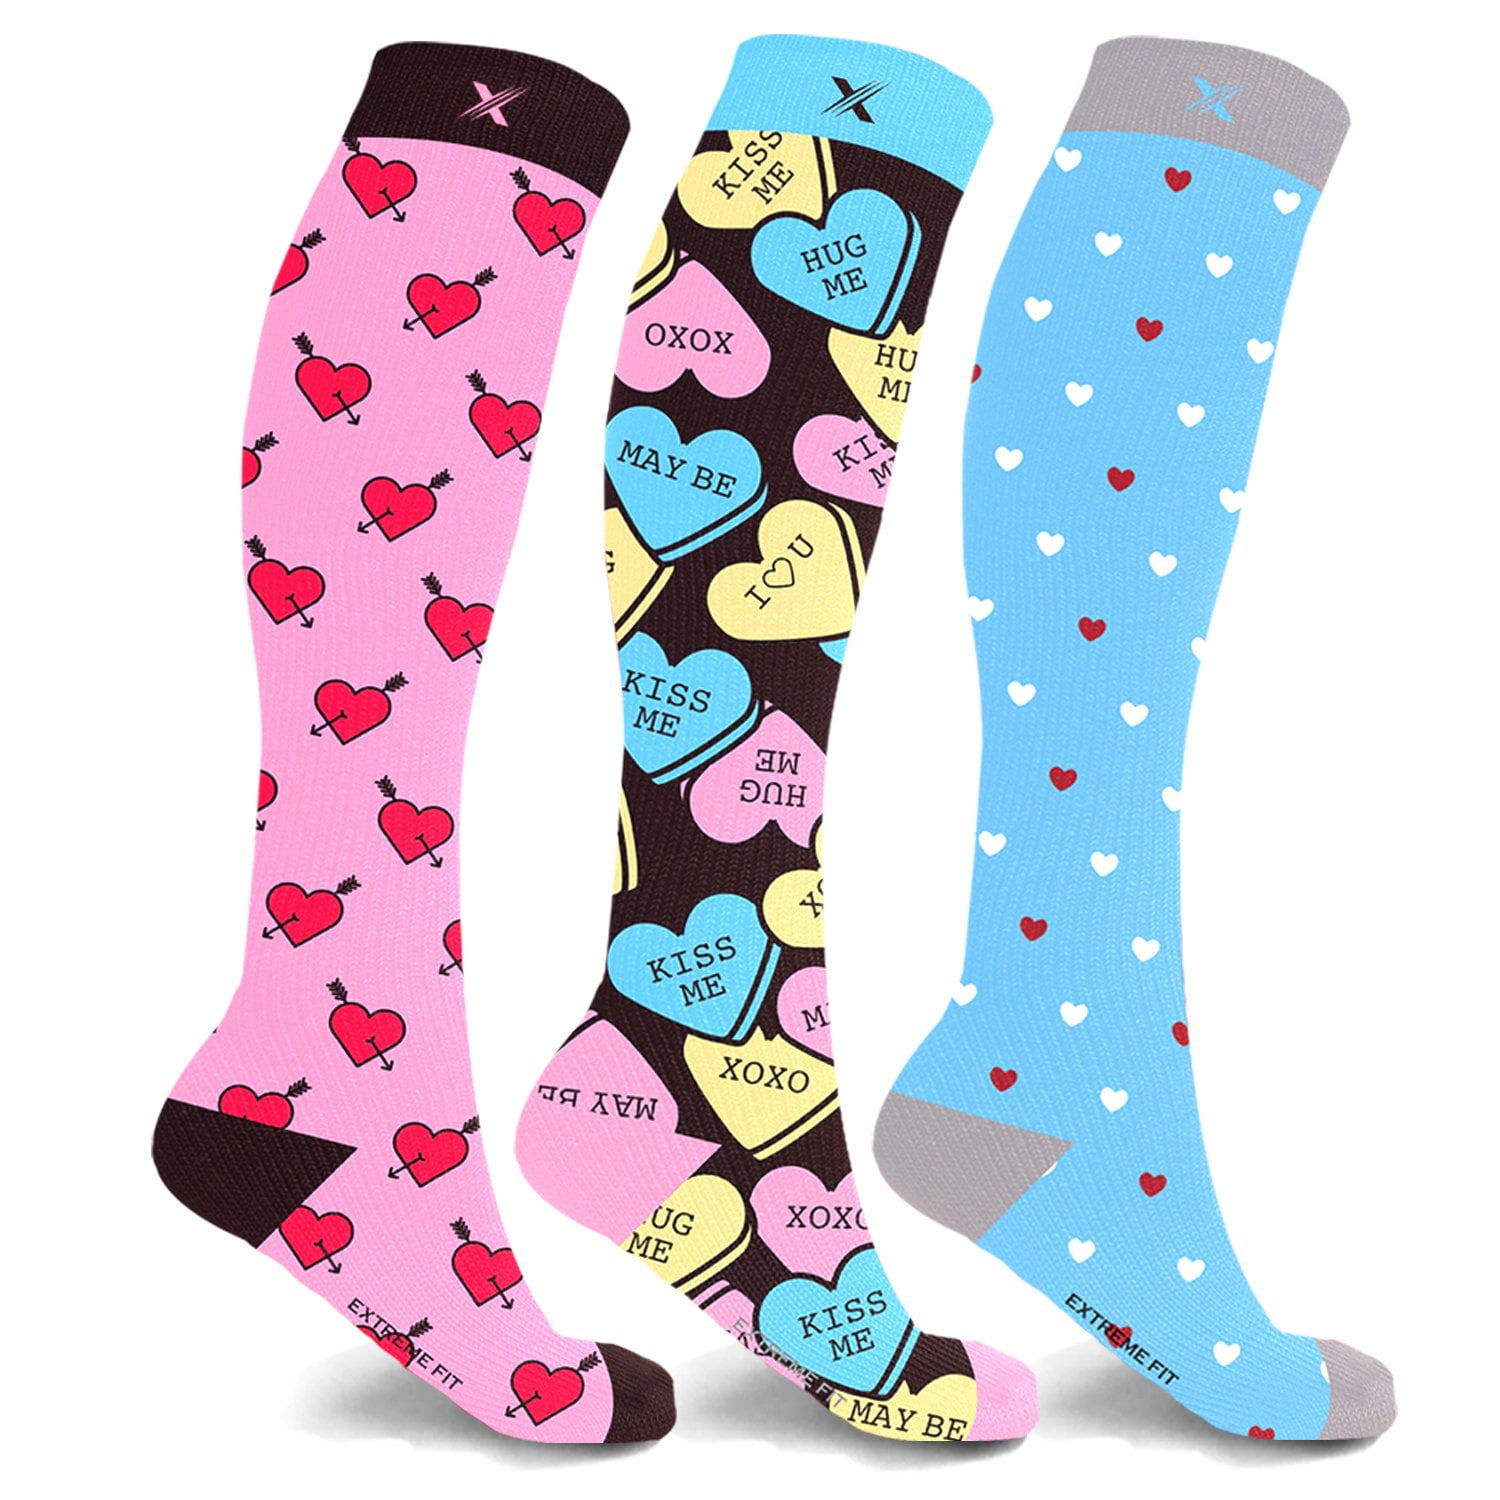 Sockwell Denim Women's Deco Dot - Moderate Graduated Compression Socks SW128W - Size S/M